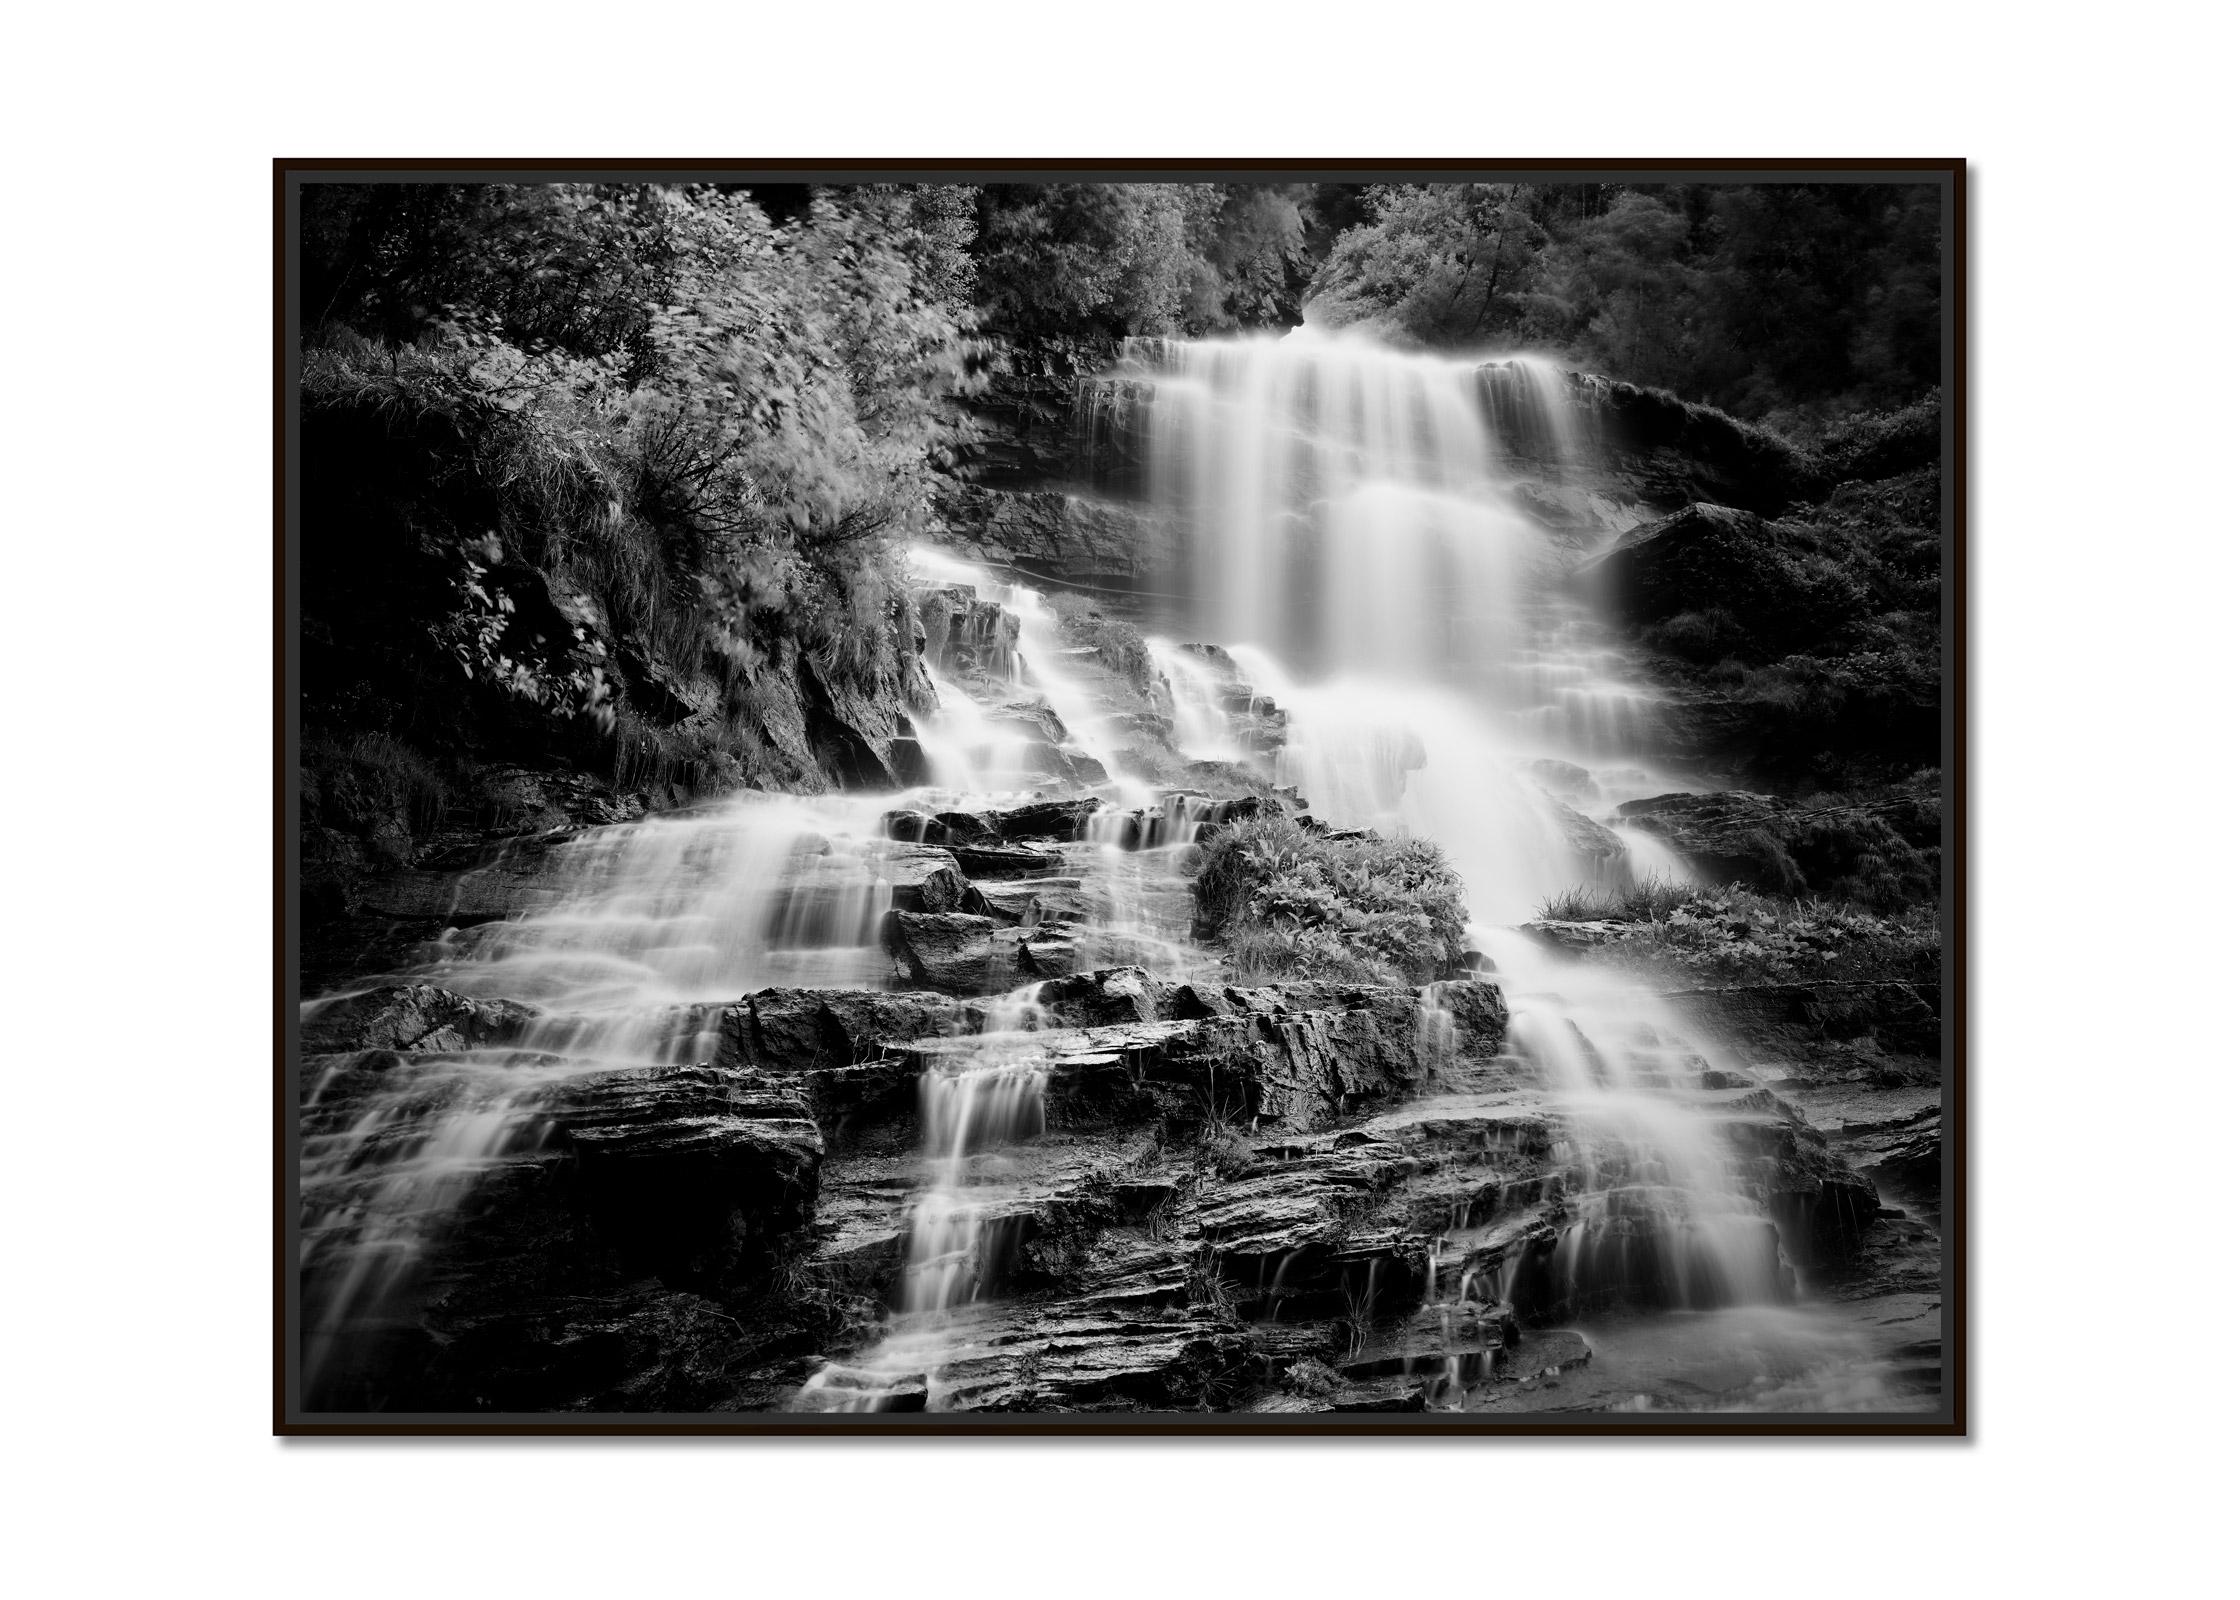 Klockelefall, Wasserfall, Gebirgsbach, Schwarz-Weiß-Fotografie, Landschaft – Photograph von Gerald Berghammer